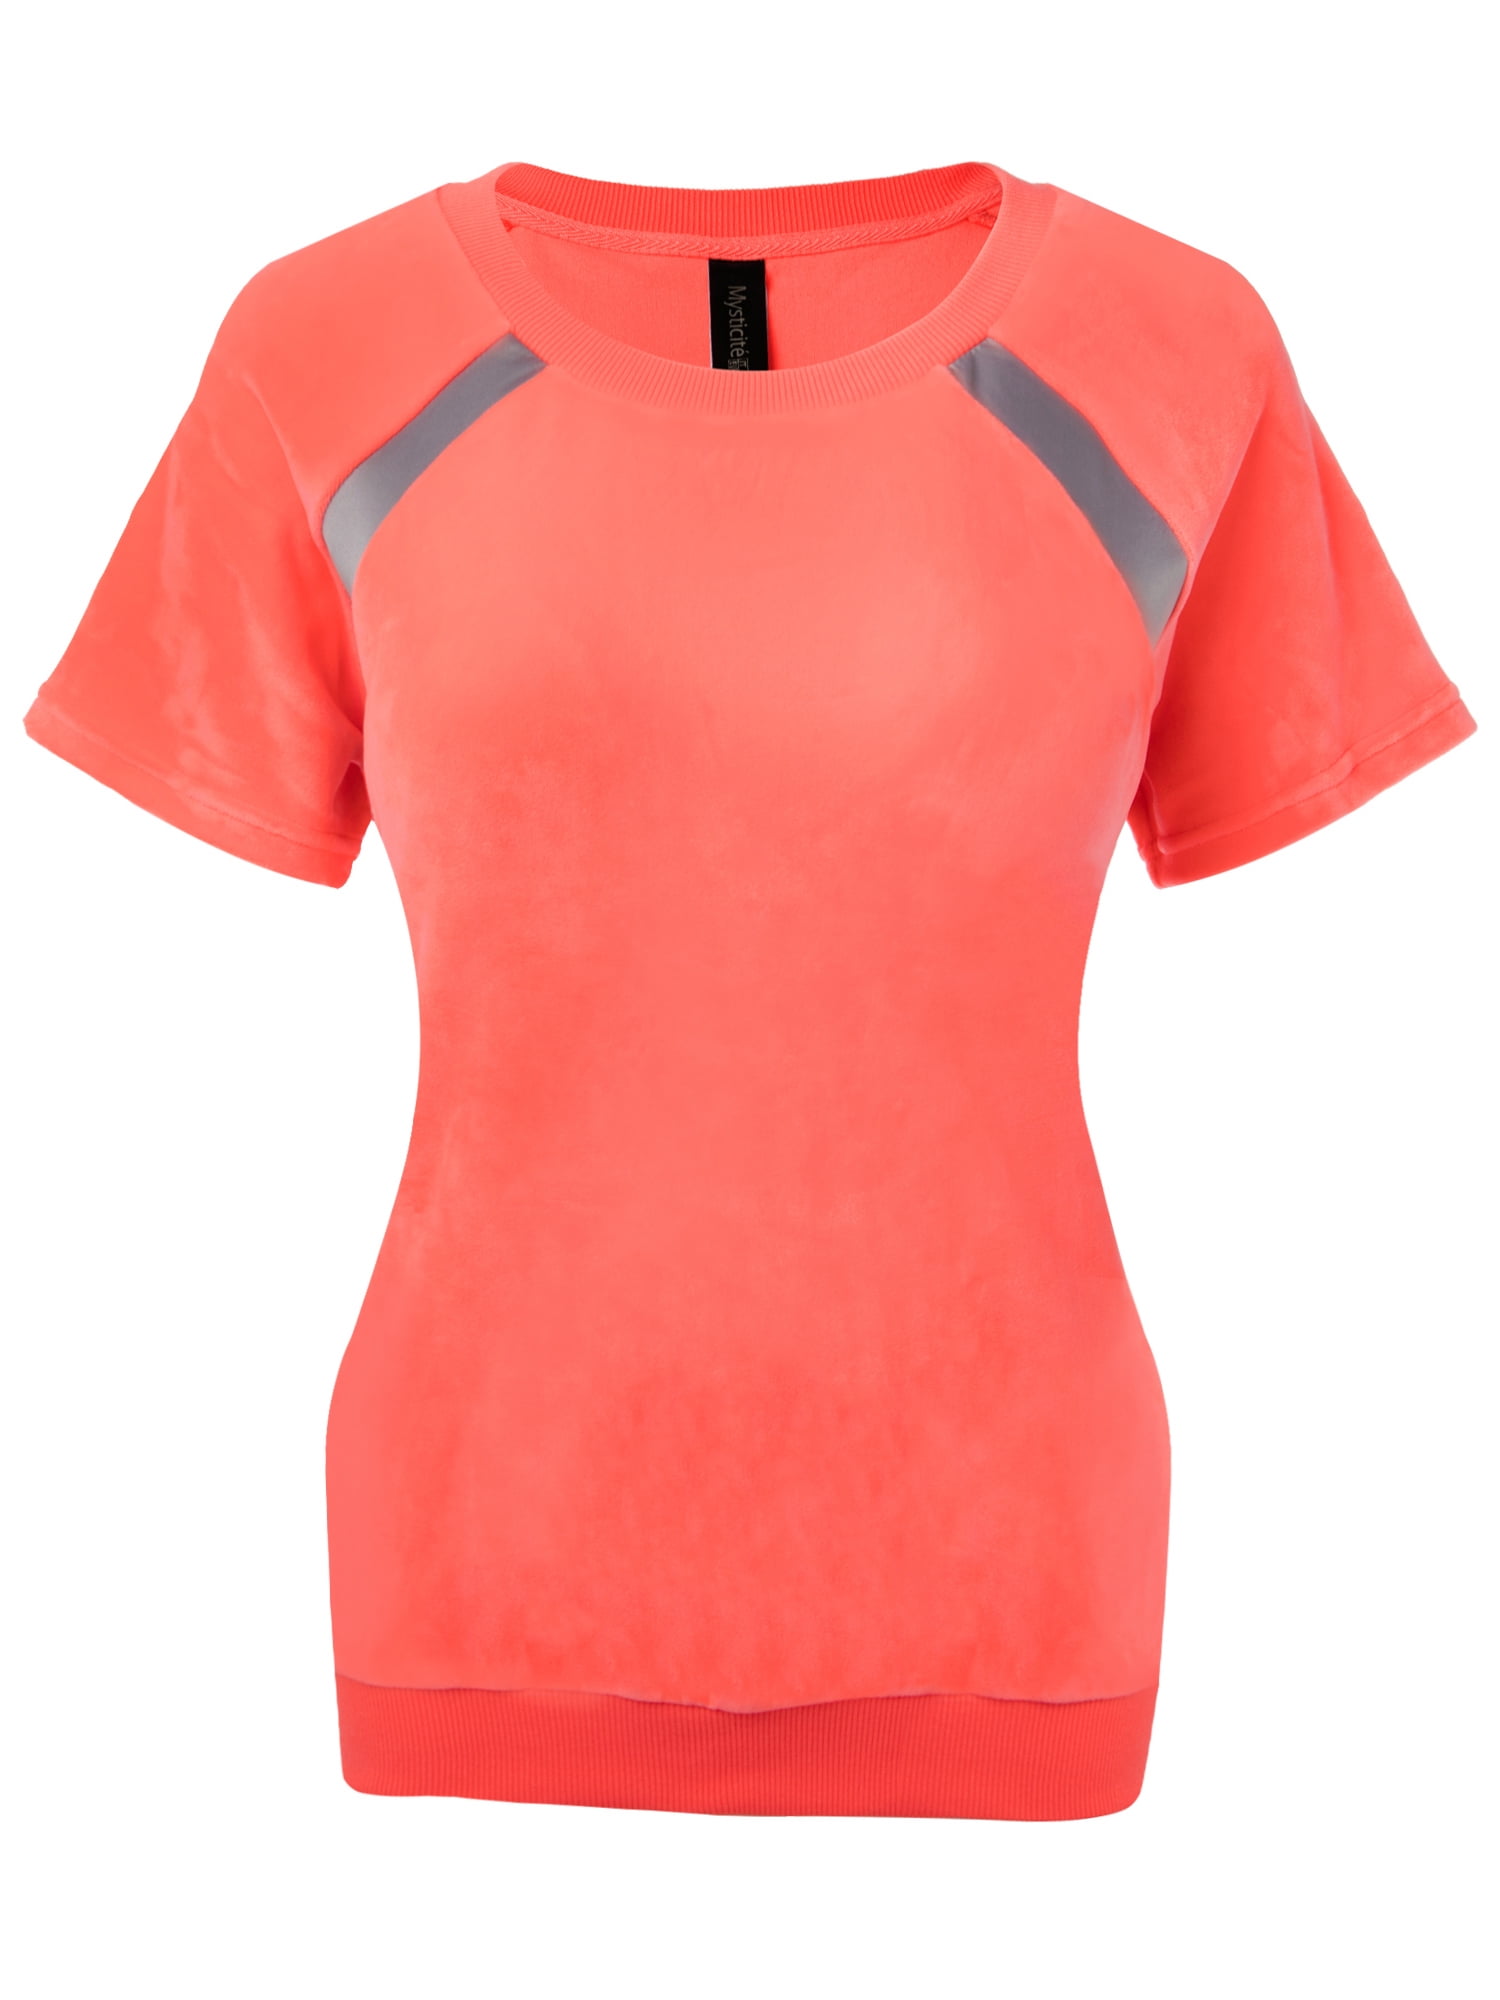 Parabler Womens Breathable Functional Sports Training Fitness T-Shirt Short Sleeve V-Neck Running Shirt Yoga Top Loose Fit Running Shirt for Women